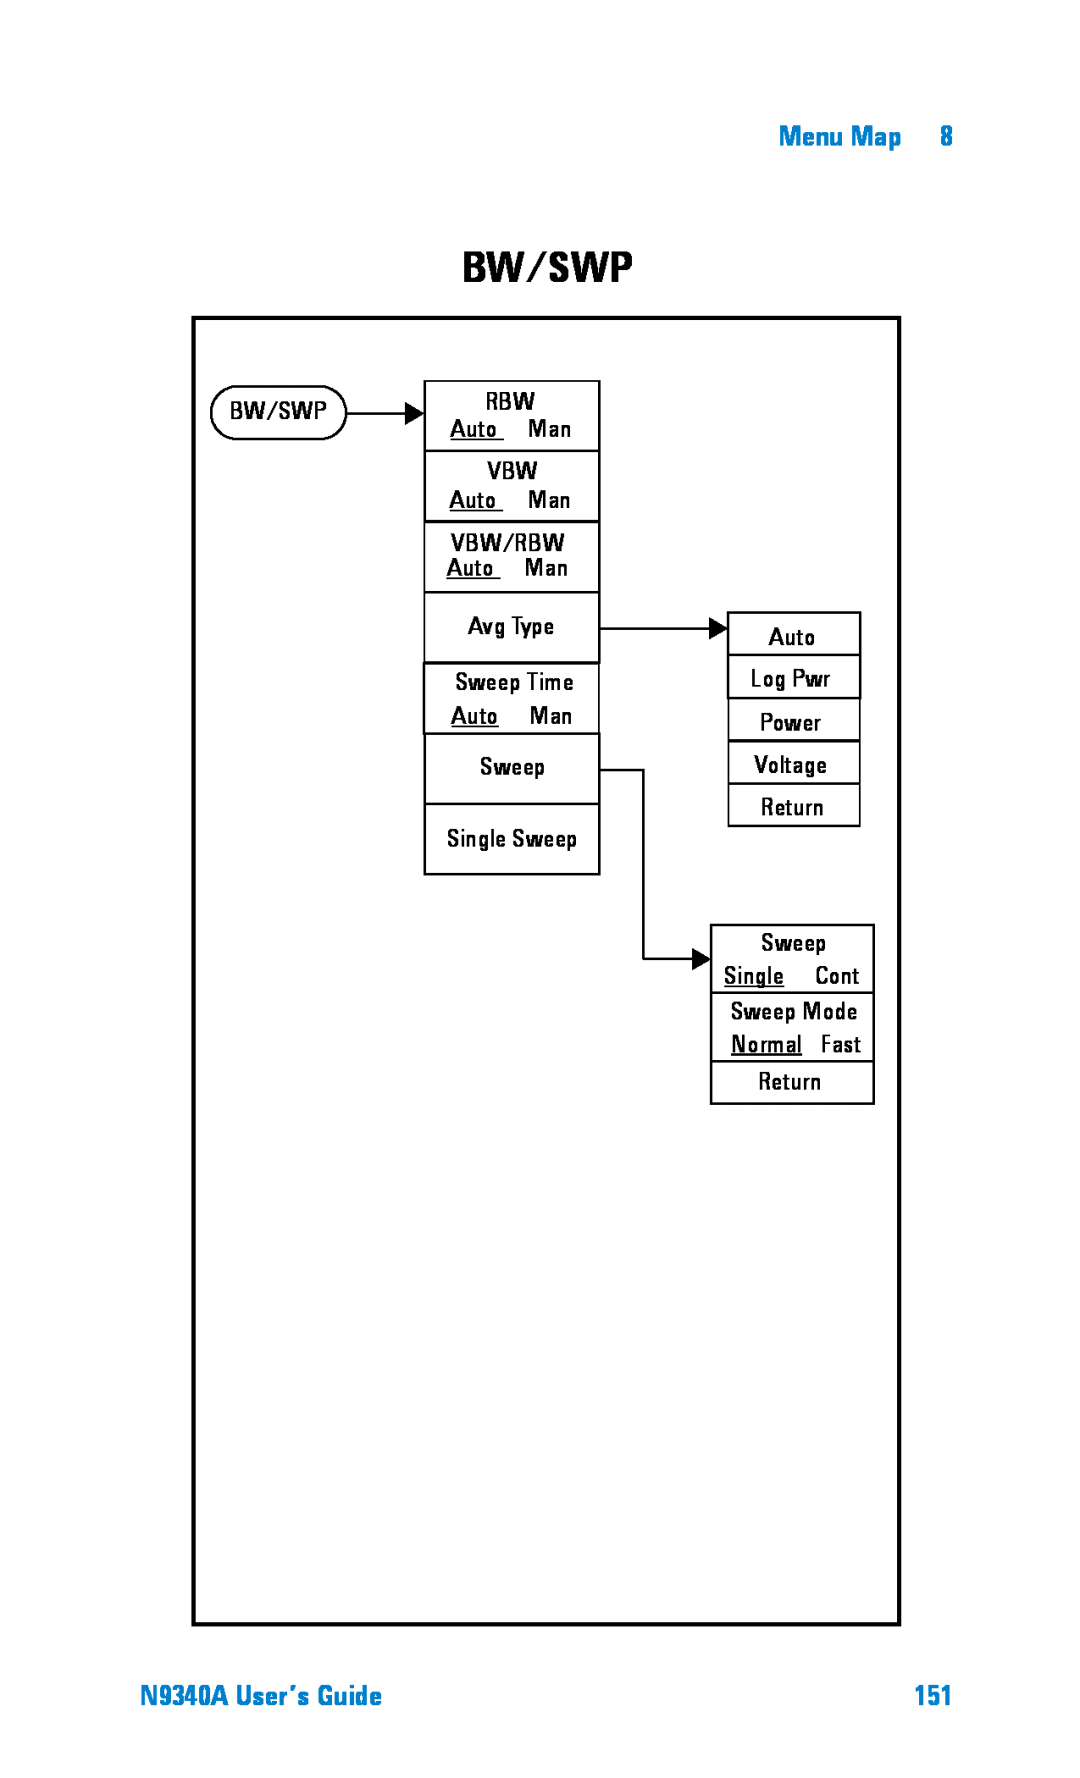 Agilent Technologies manual Menu Map, Bw/Swp, N9340A User’s Guide 